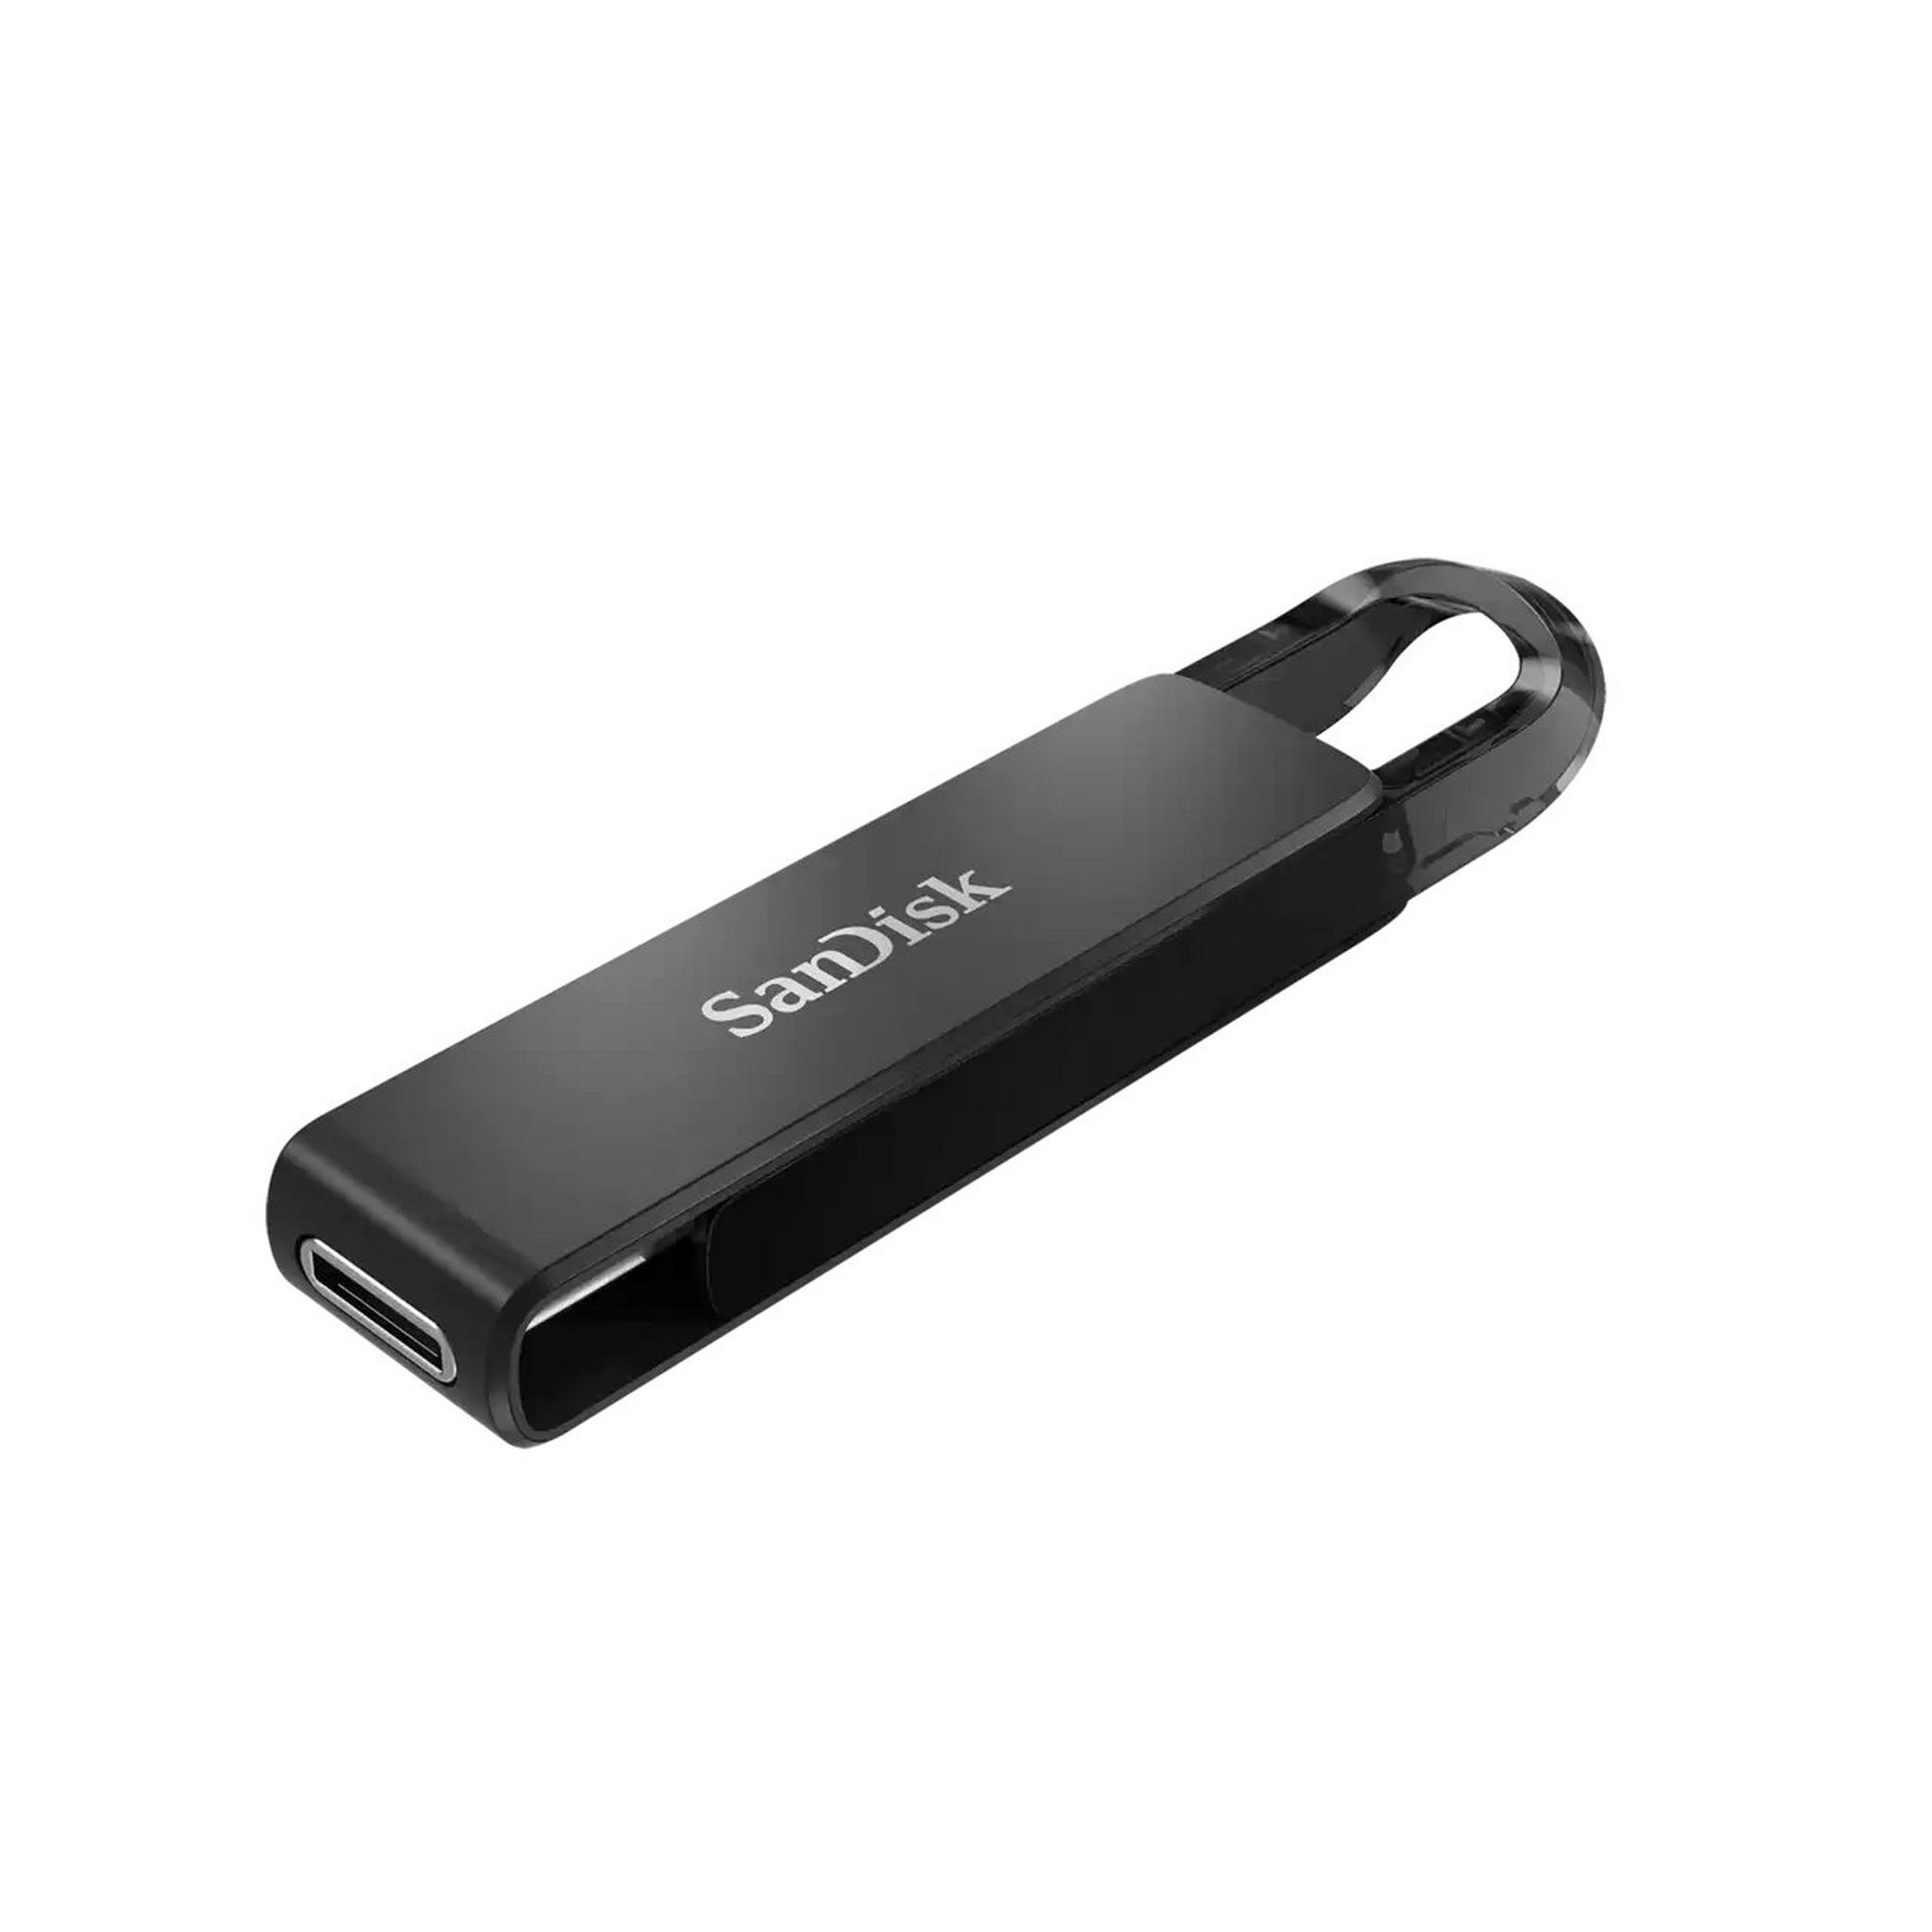 SanDisk Ultra USB Type-C Flash Drive - 64GB